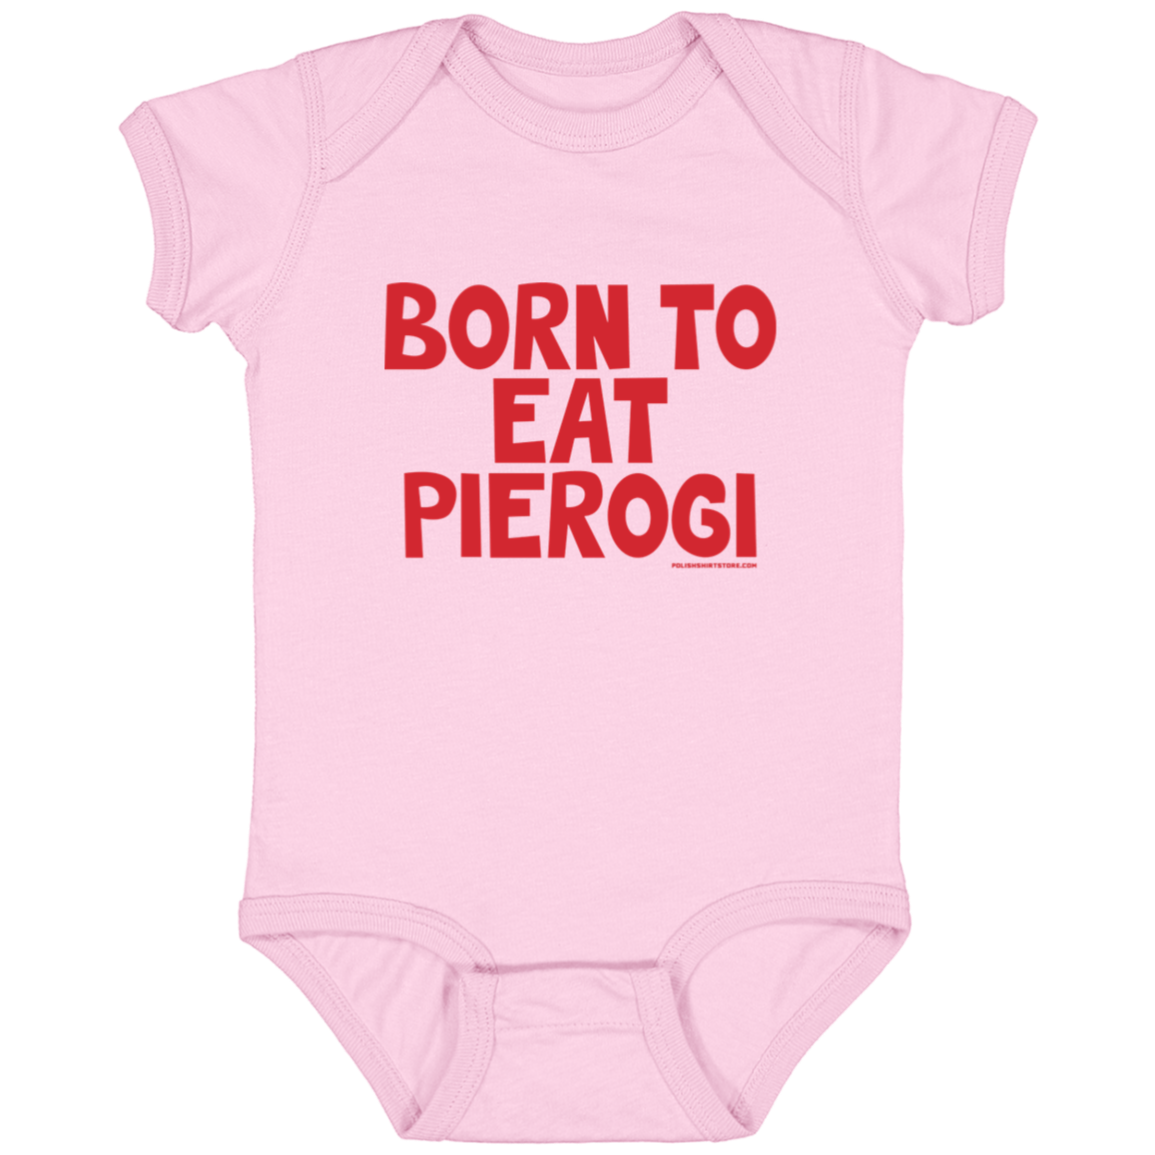 Born To Eat Pierogi Infant Bodysuit Baby CustomCat Pink Newborn 